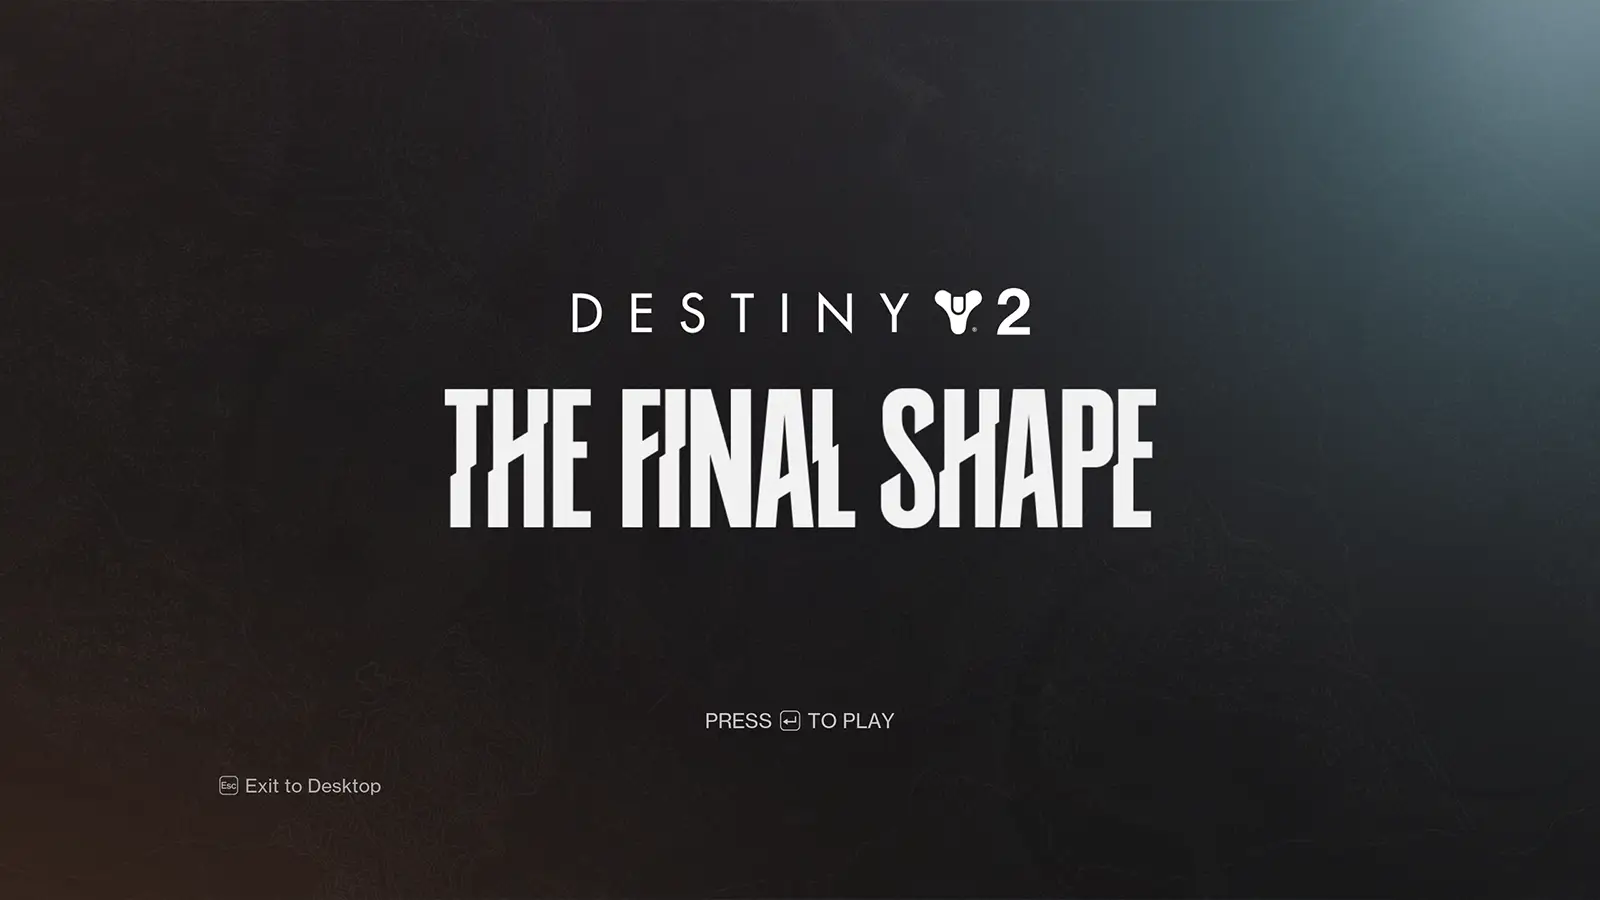 Destiny 2 The Final Shape title screen